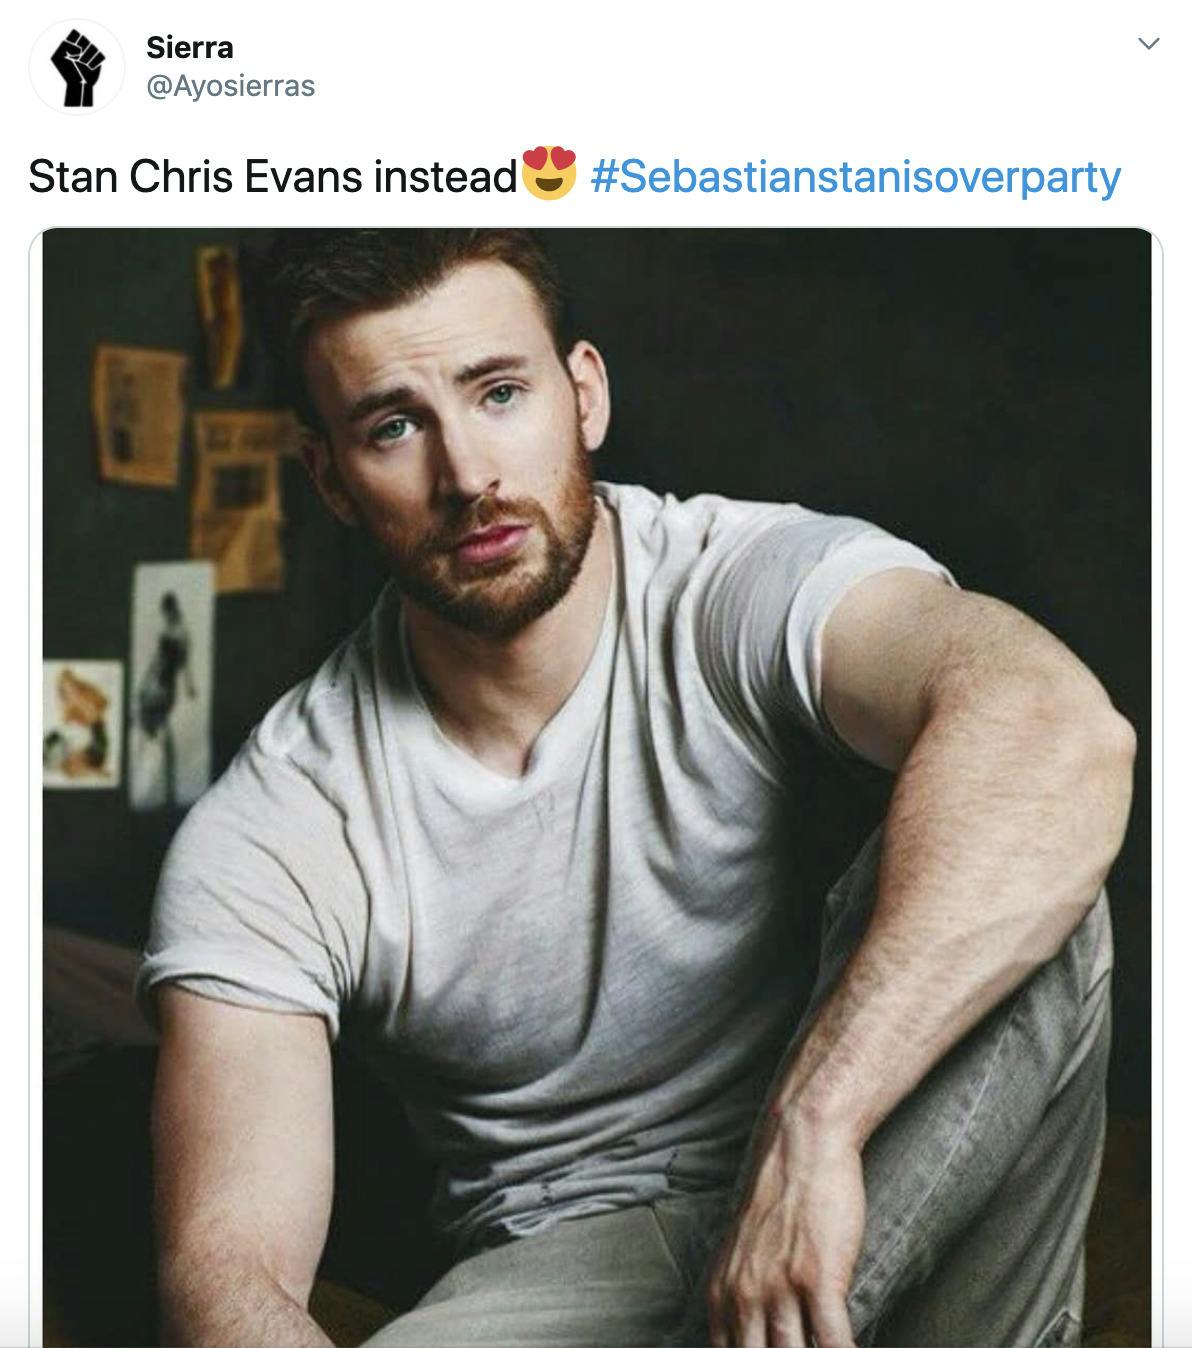 "Stan Chris Evans instead #sebeastianstaniscancelledparty" image of Chris Evans